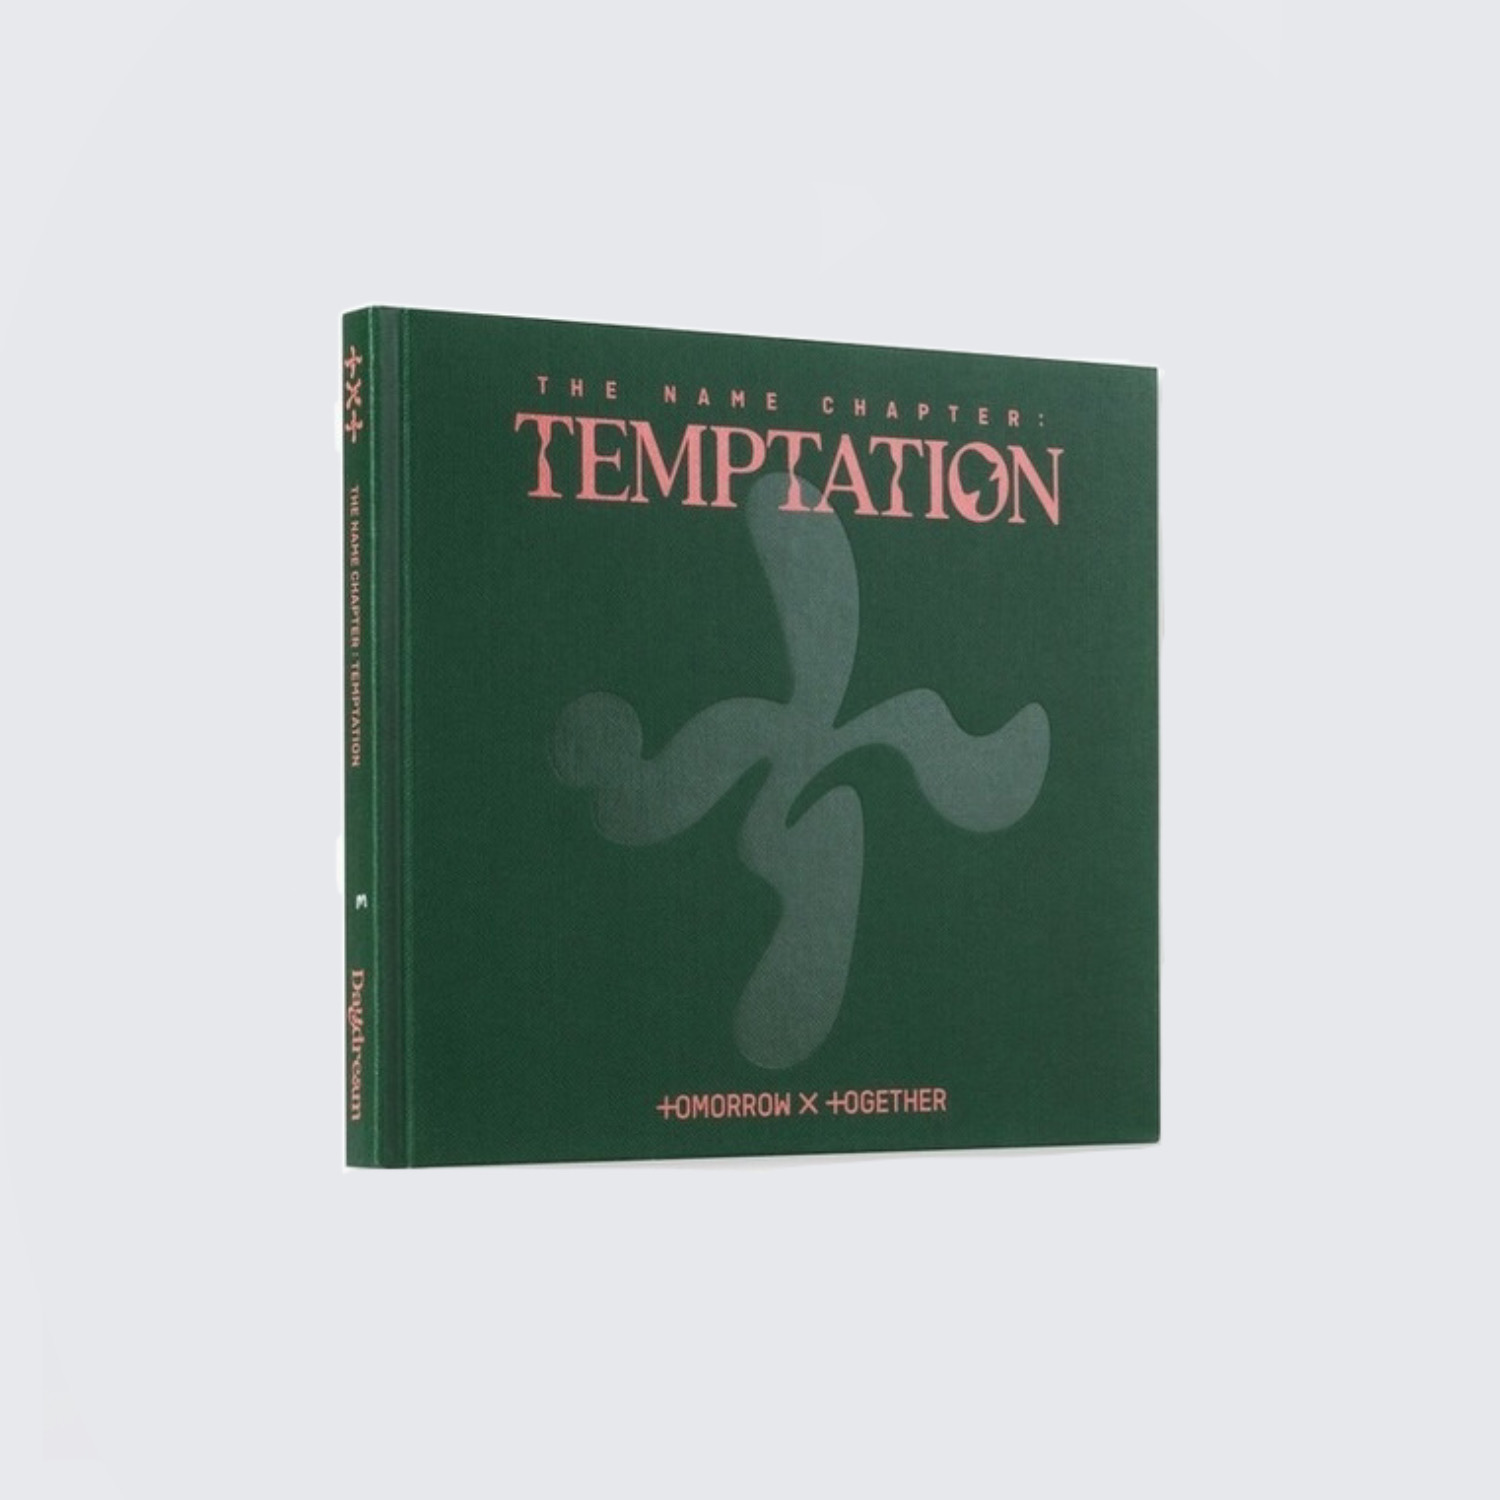 Temptation txt. Txt the name Chapter Temptation альбом. Txt the name Chapter Temptation Daydream. Альбом тхт темптатион. Temptation txt обложка.